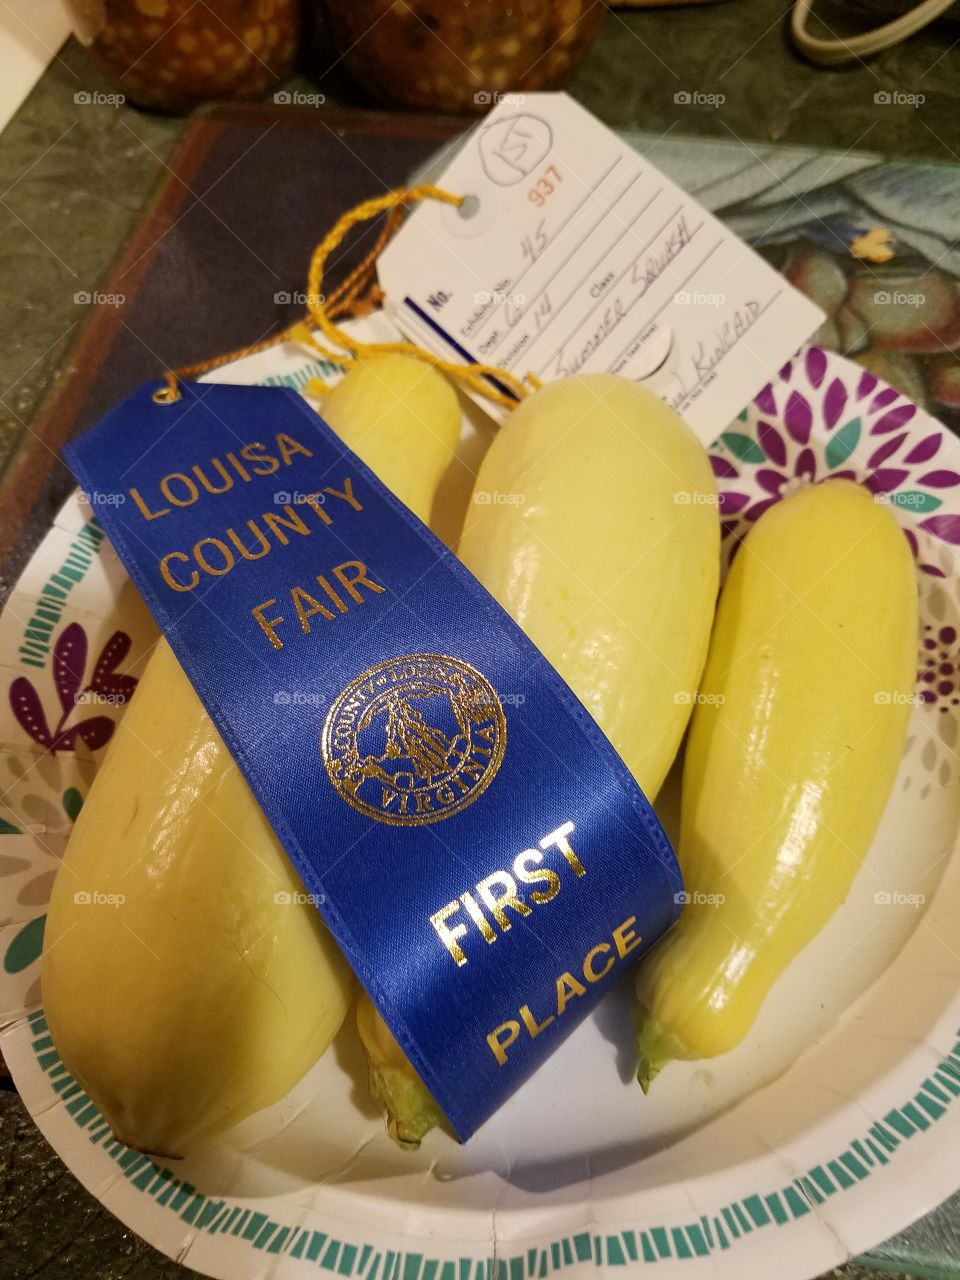 Prize winning Squash. Louisa County Fair 2017